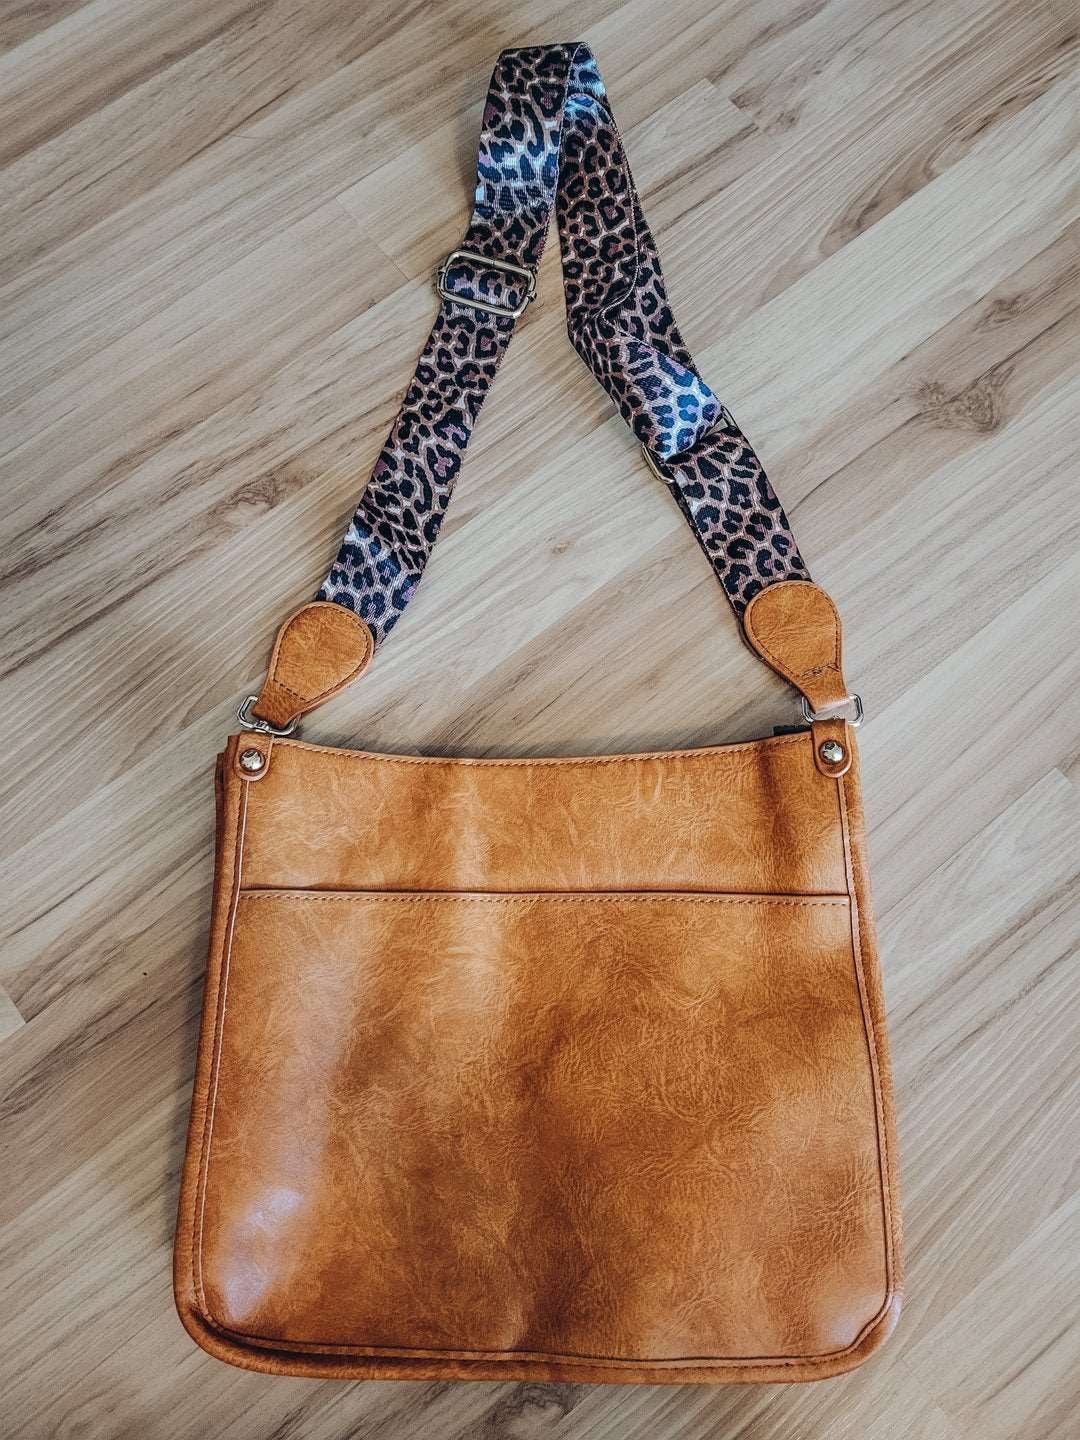 Light brown crossbody handbag with leopard strap.